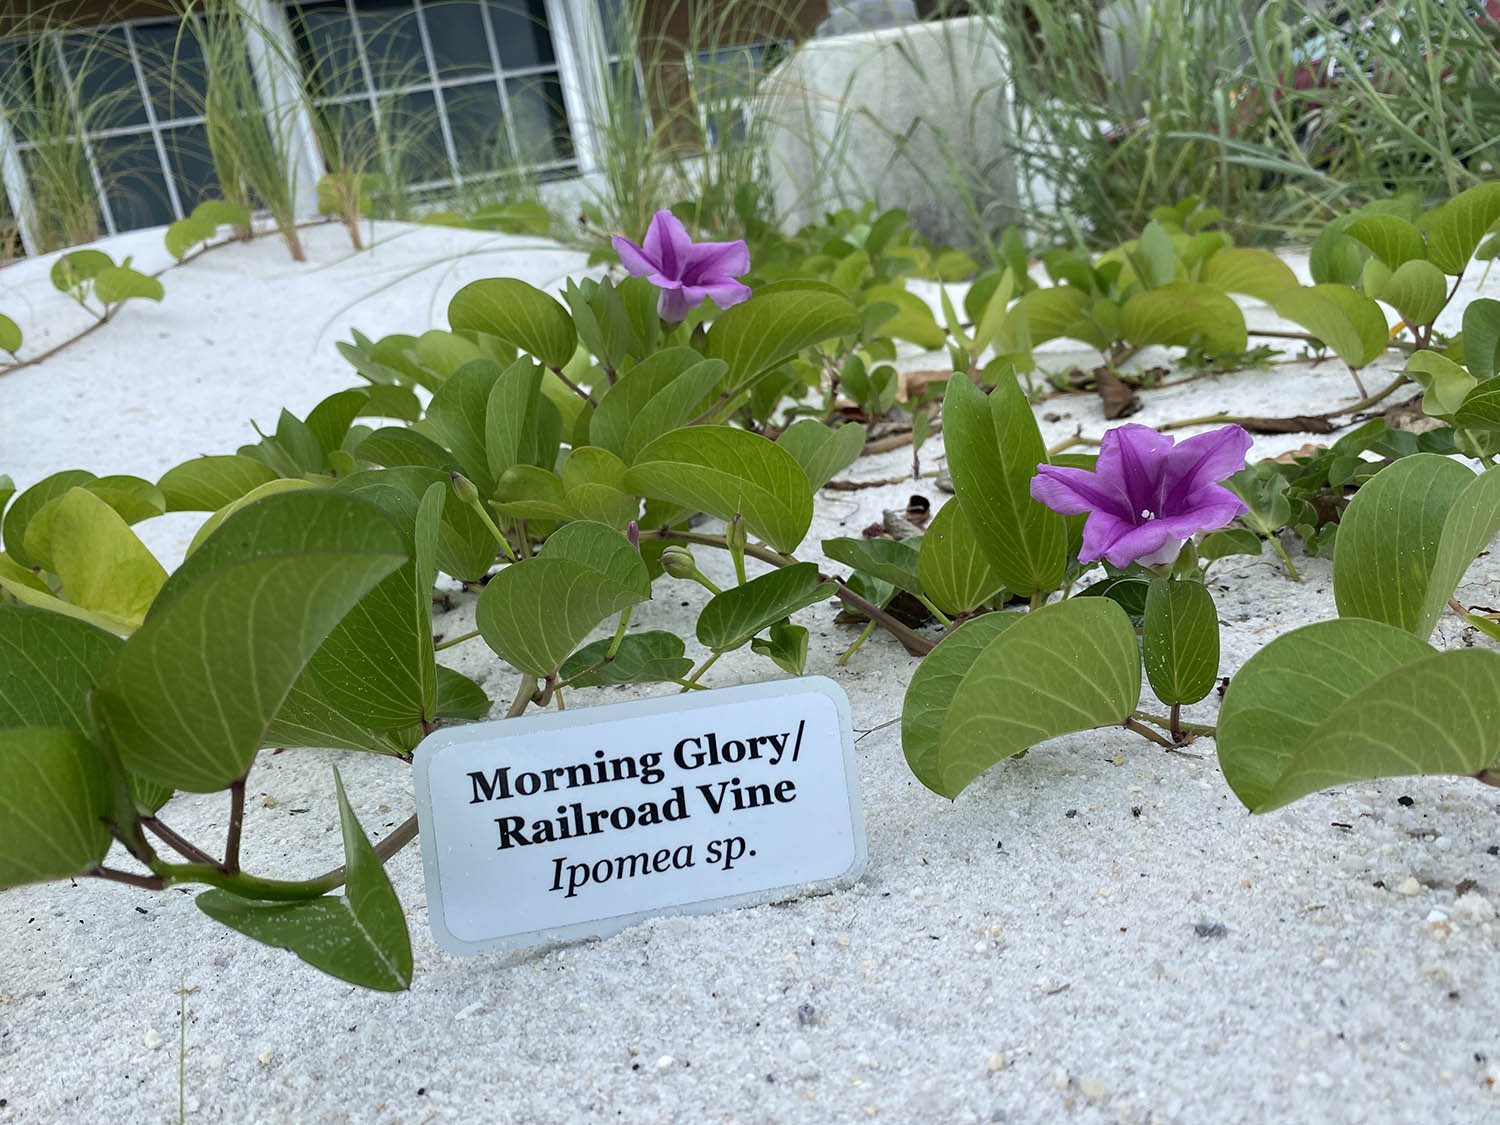 Morning Glory/Railroad Vine plants